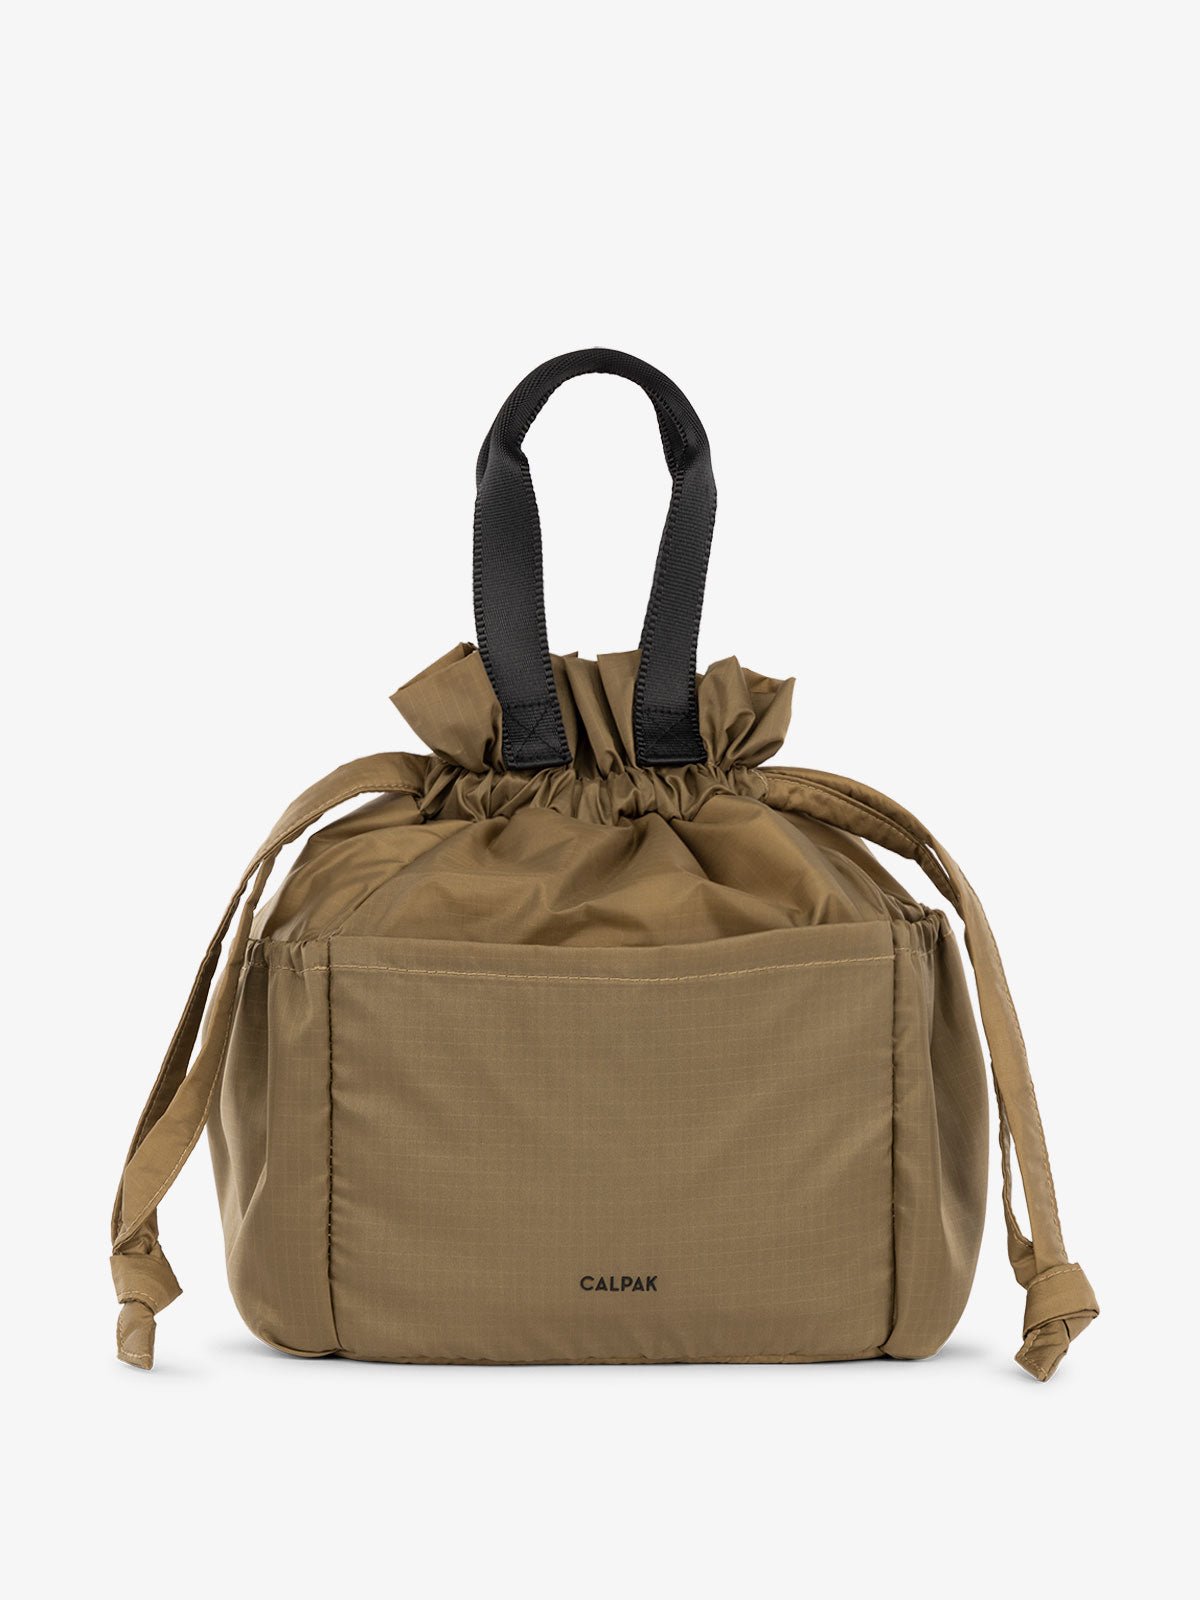 CALPAK Insulated Lunch Bag in khaki